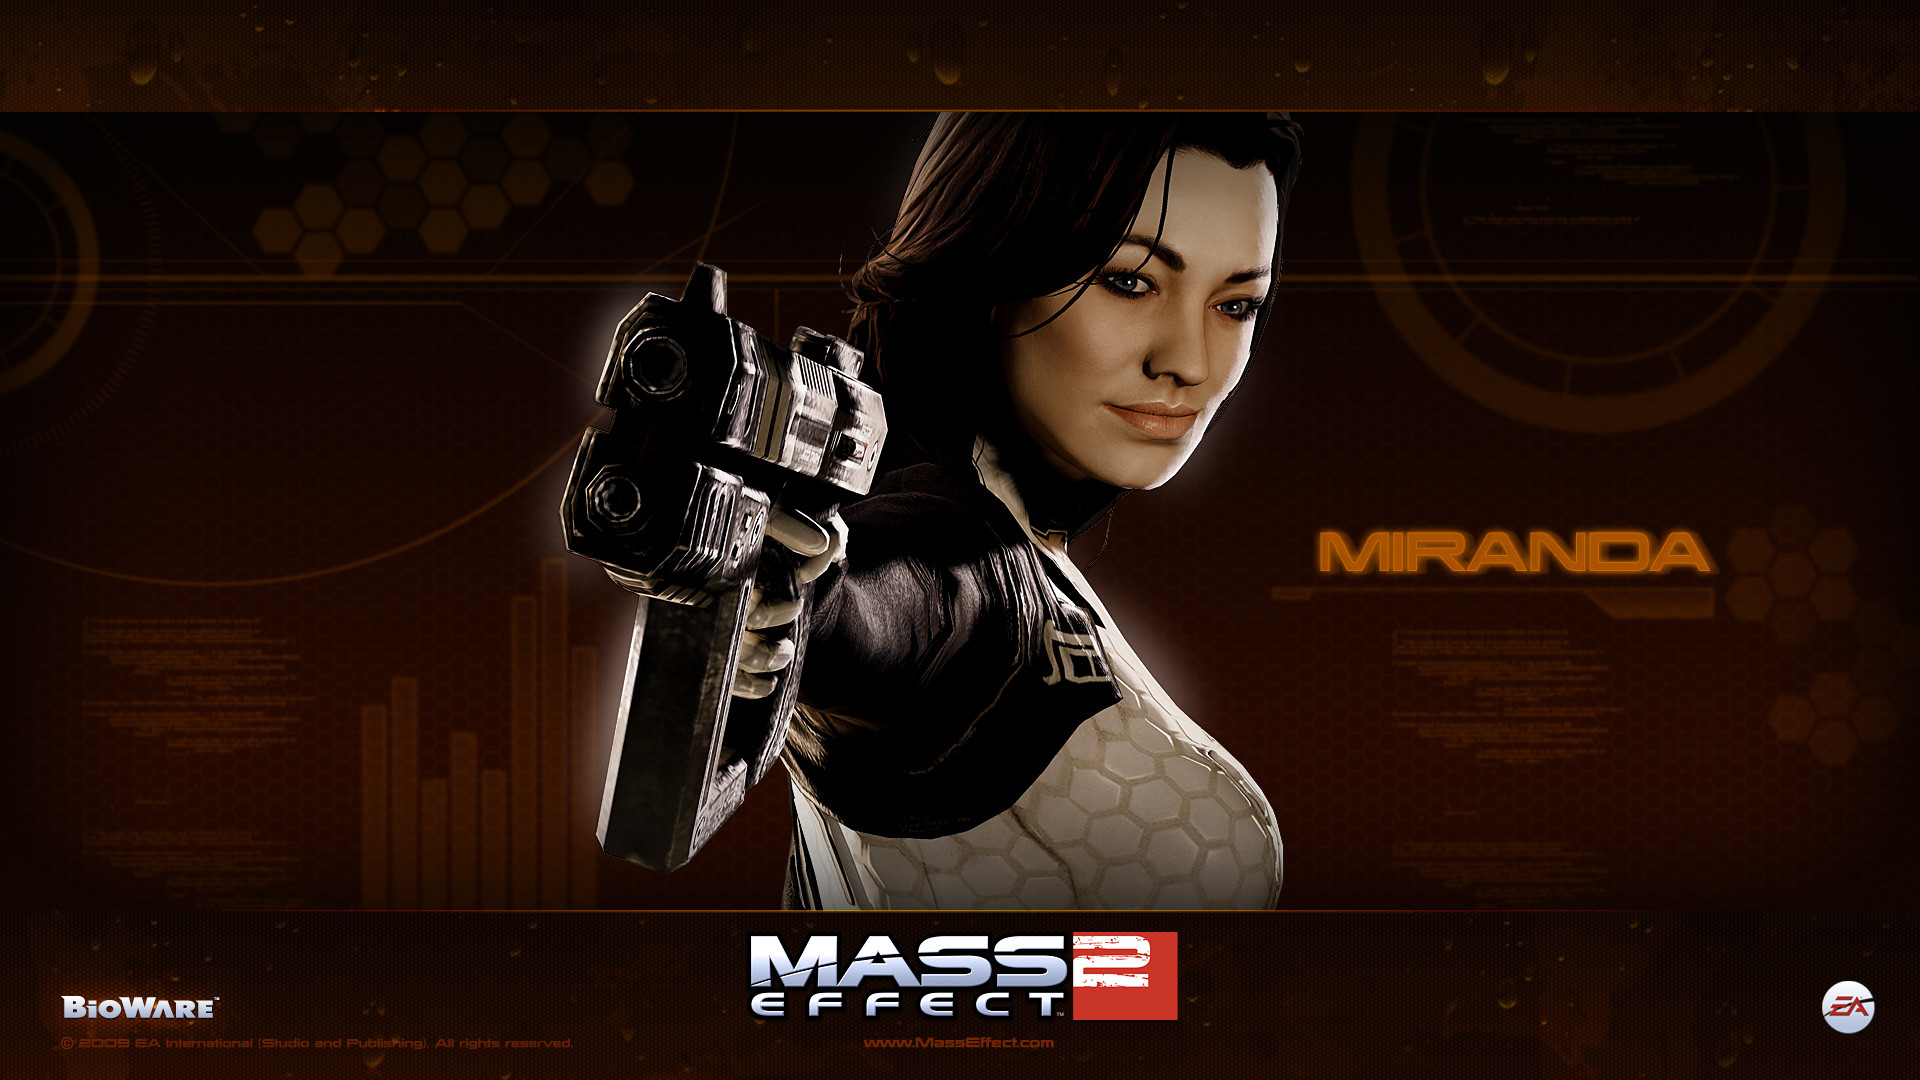 1920x1080 Miranda Lawson Mass Effect 3 wallpaper - 910156